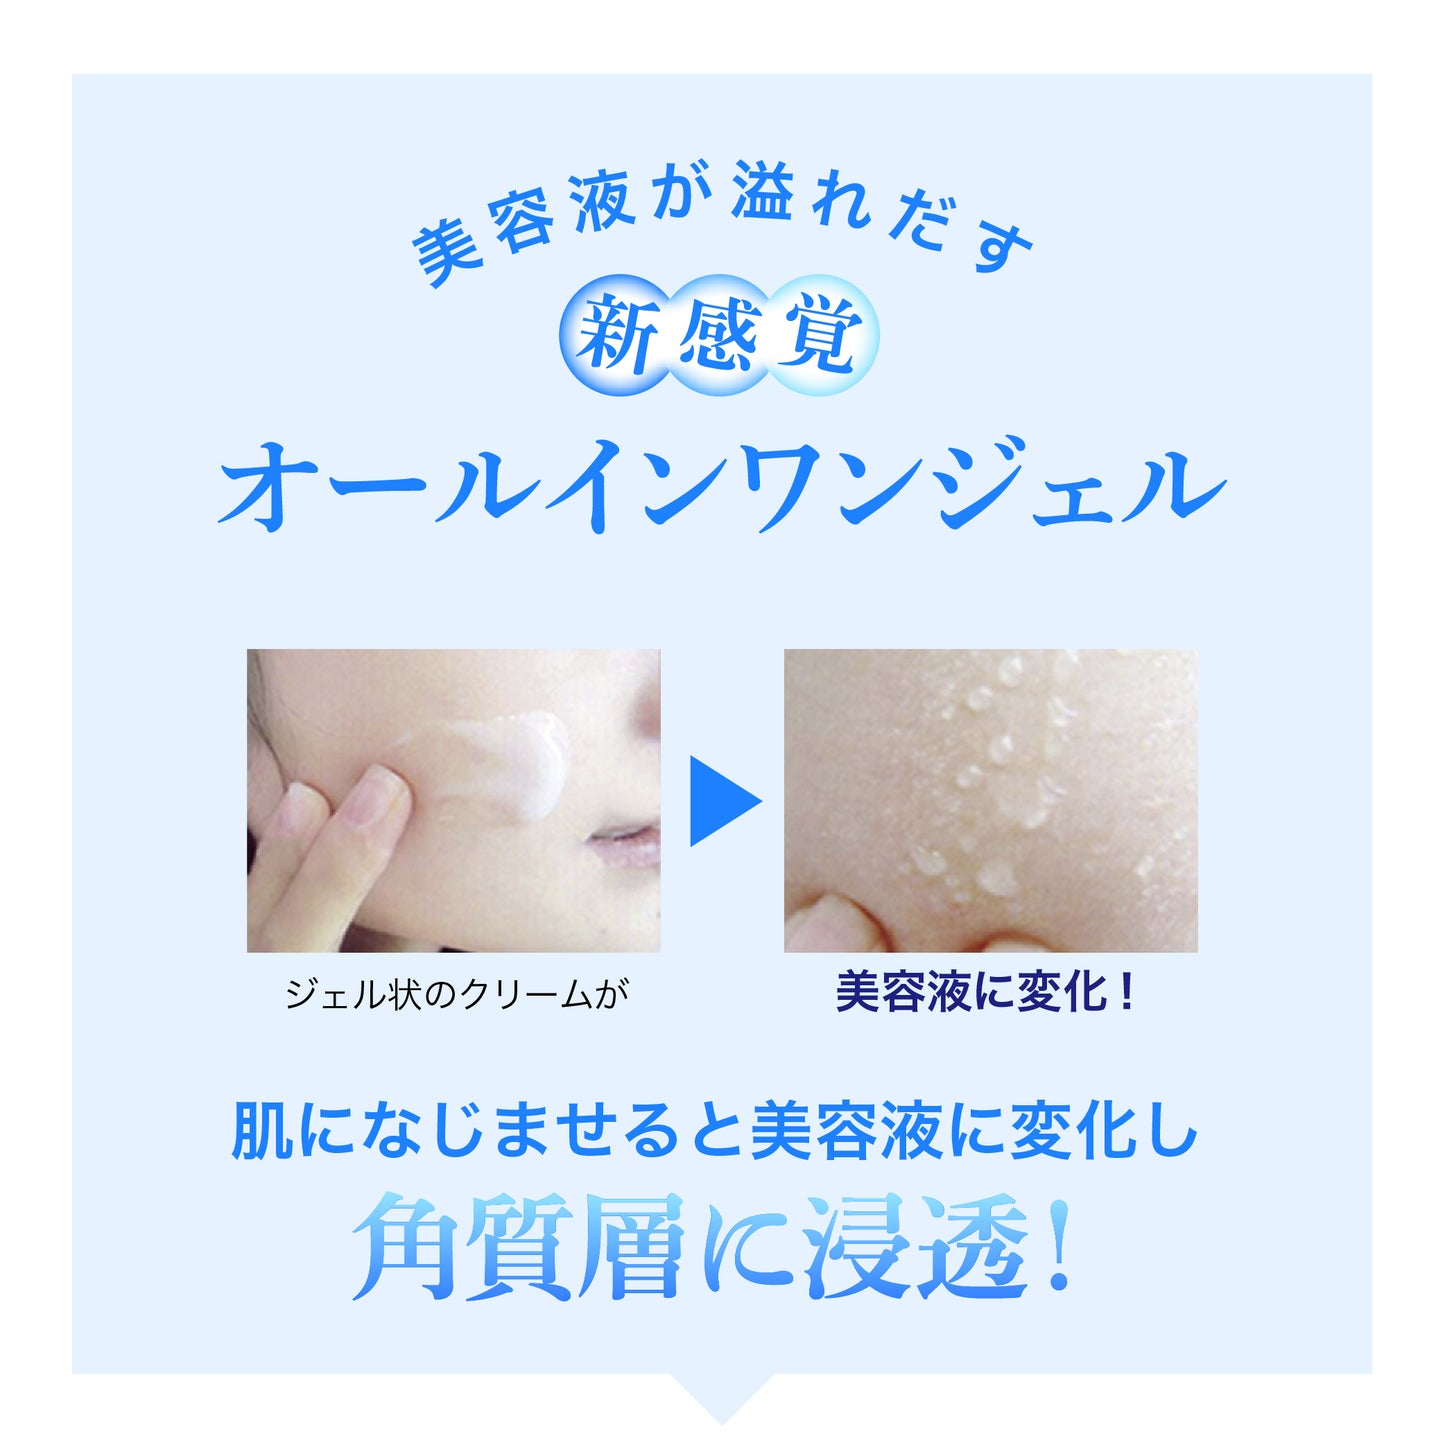 Hanajirushi Amino Acid & Moisturizing Face Mask, Moisturizing Gel, Dry Skin Solution, All-in-One Gel